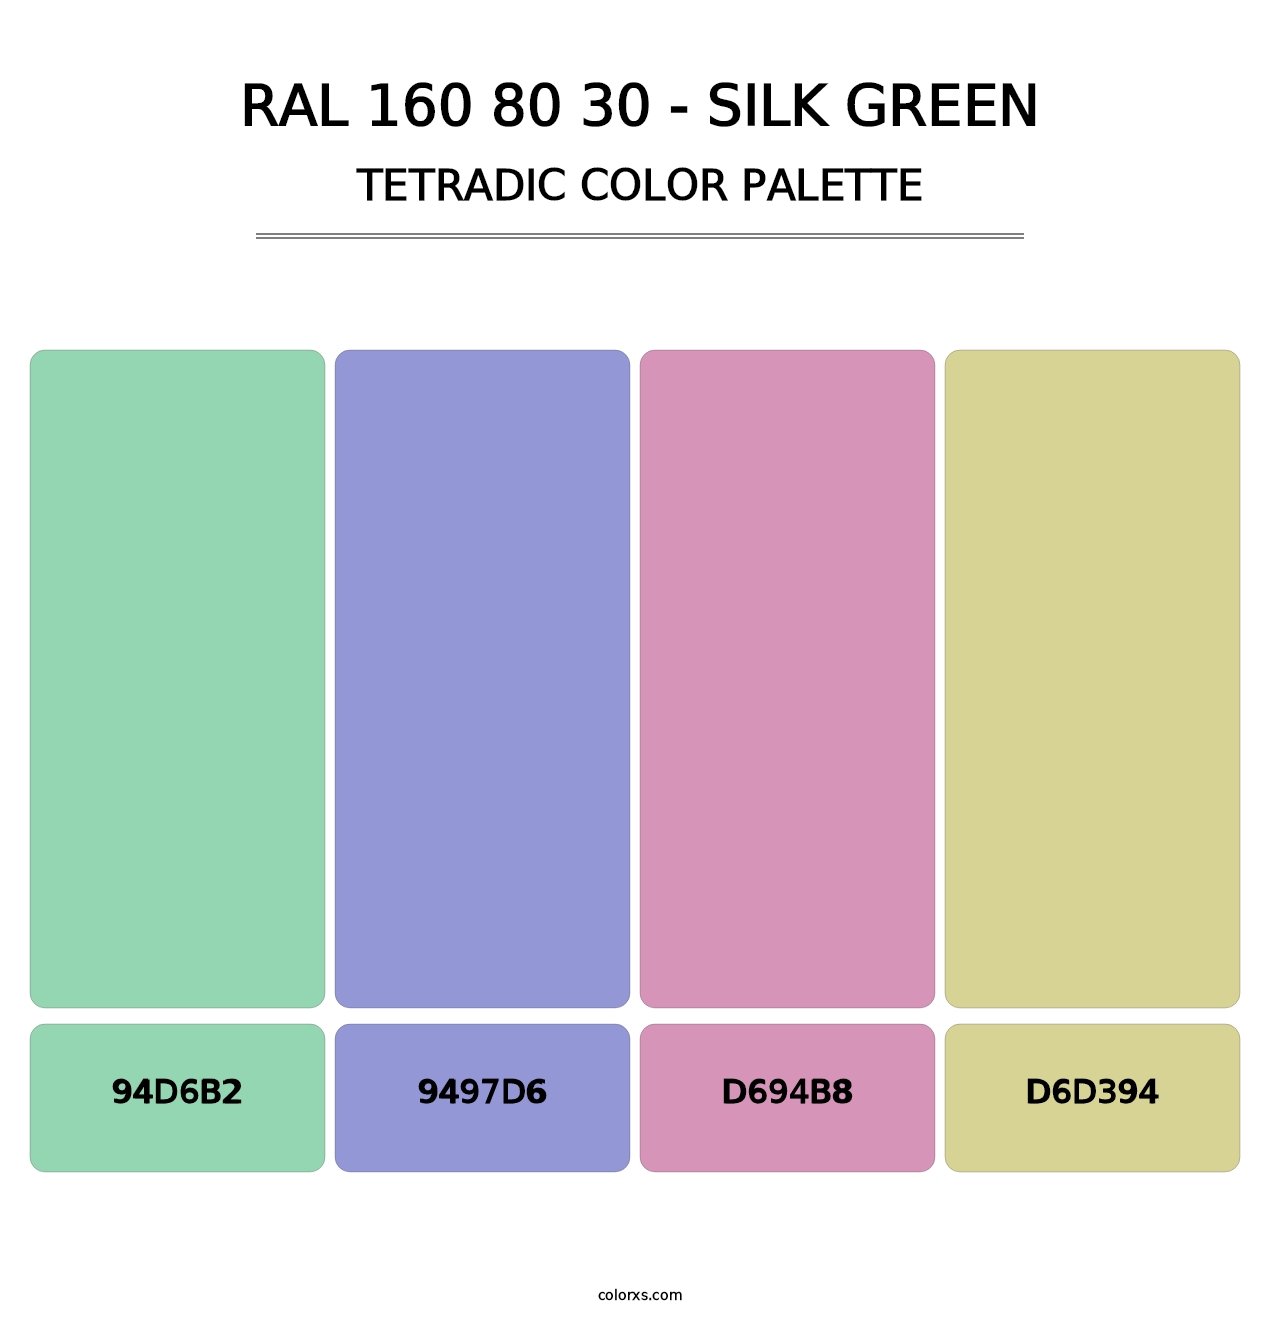 RAL 160 80 30 - Silk Green - Tetradic Color Palette